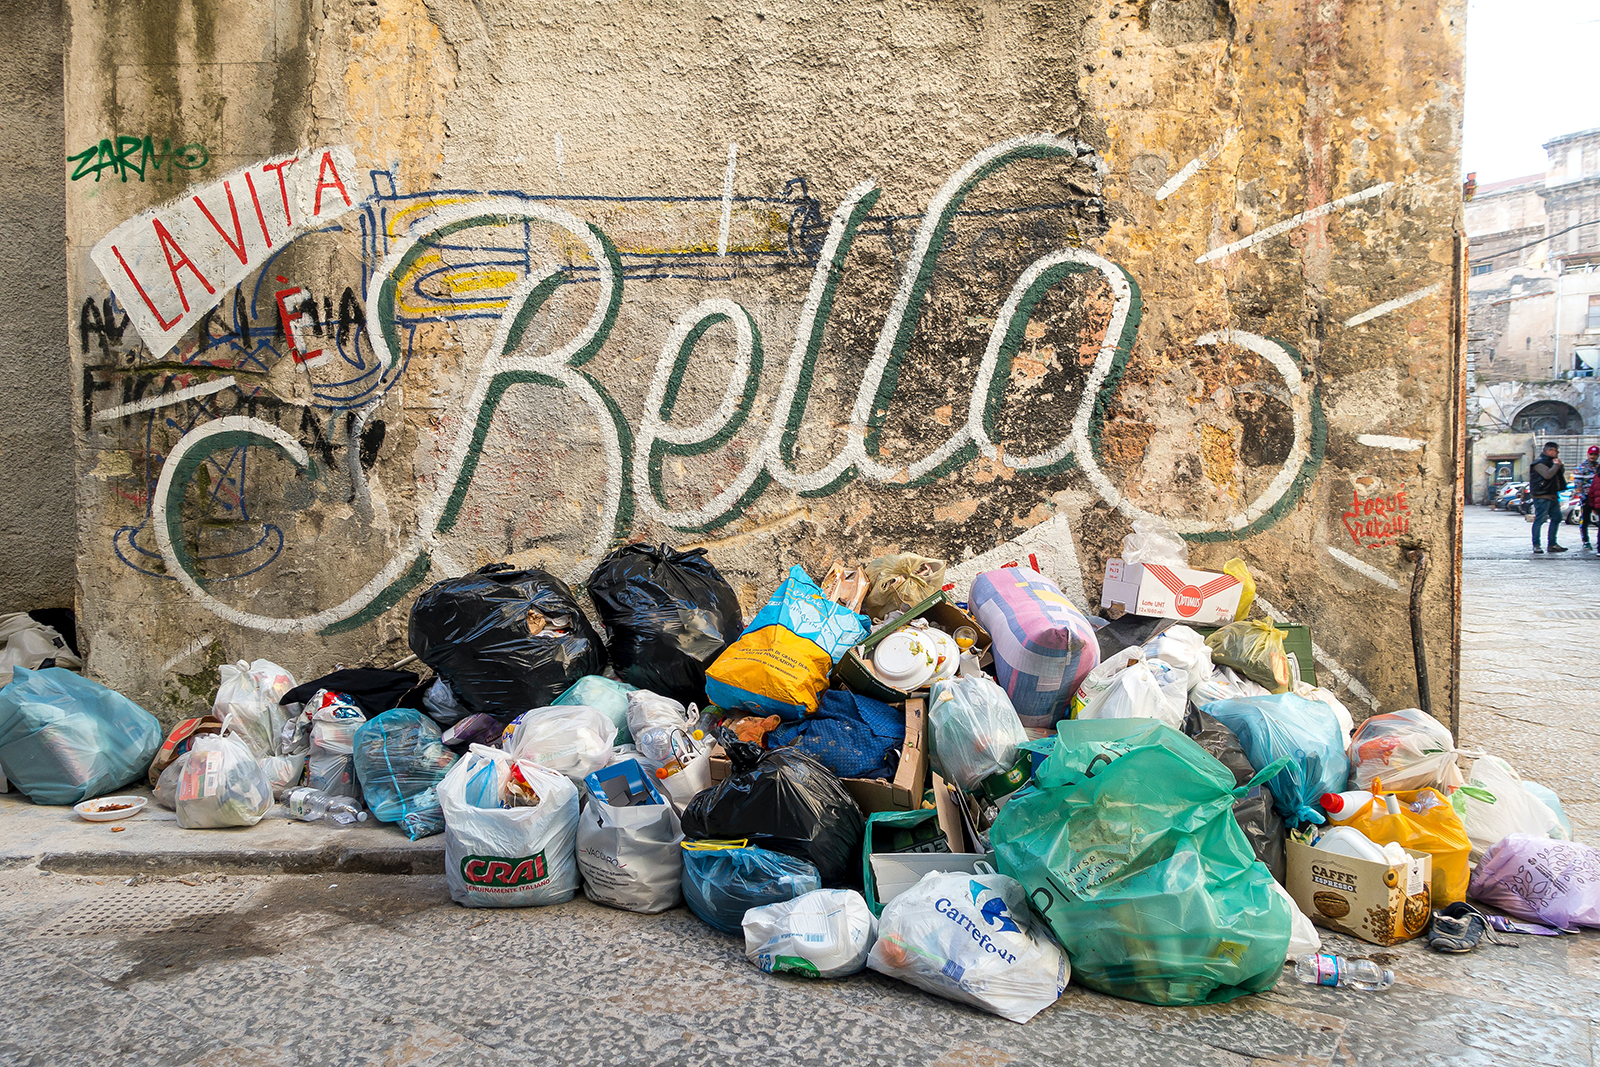 A street corner featuring a "La vita bella" mural and a pile of trash bags.